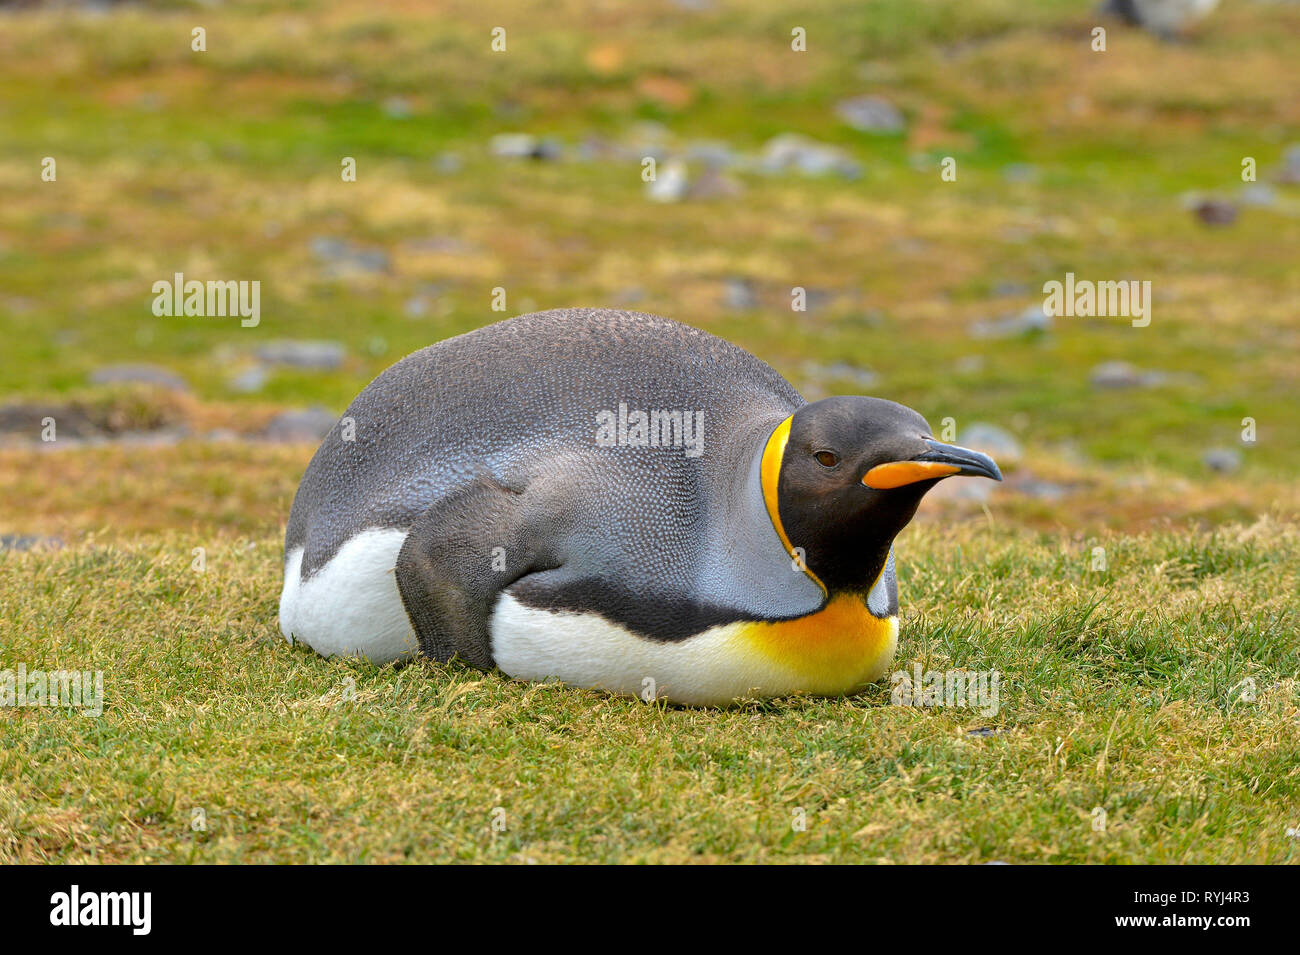 King penguin (Aptenodytes patagonicus), adult laying on grass, Carcass Island, Falkland Islands, South Atlantic Ocean Stock Photo